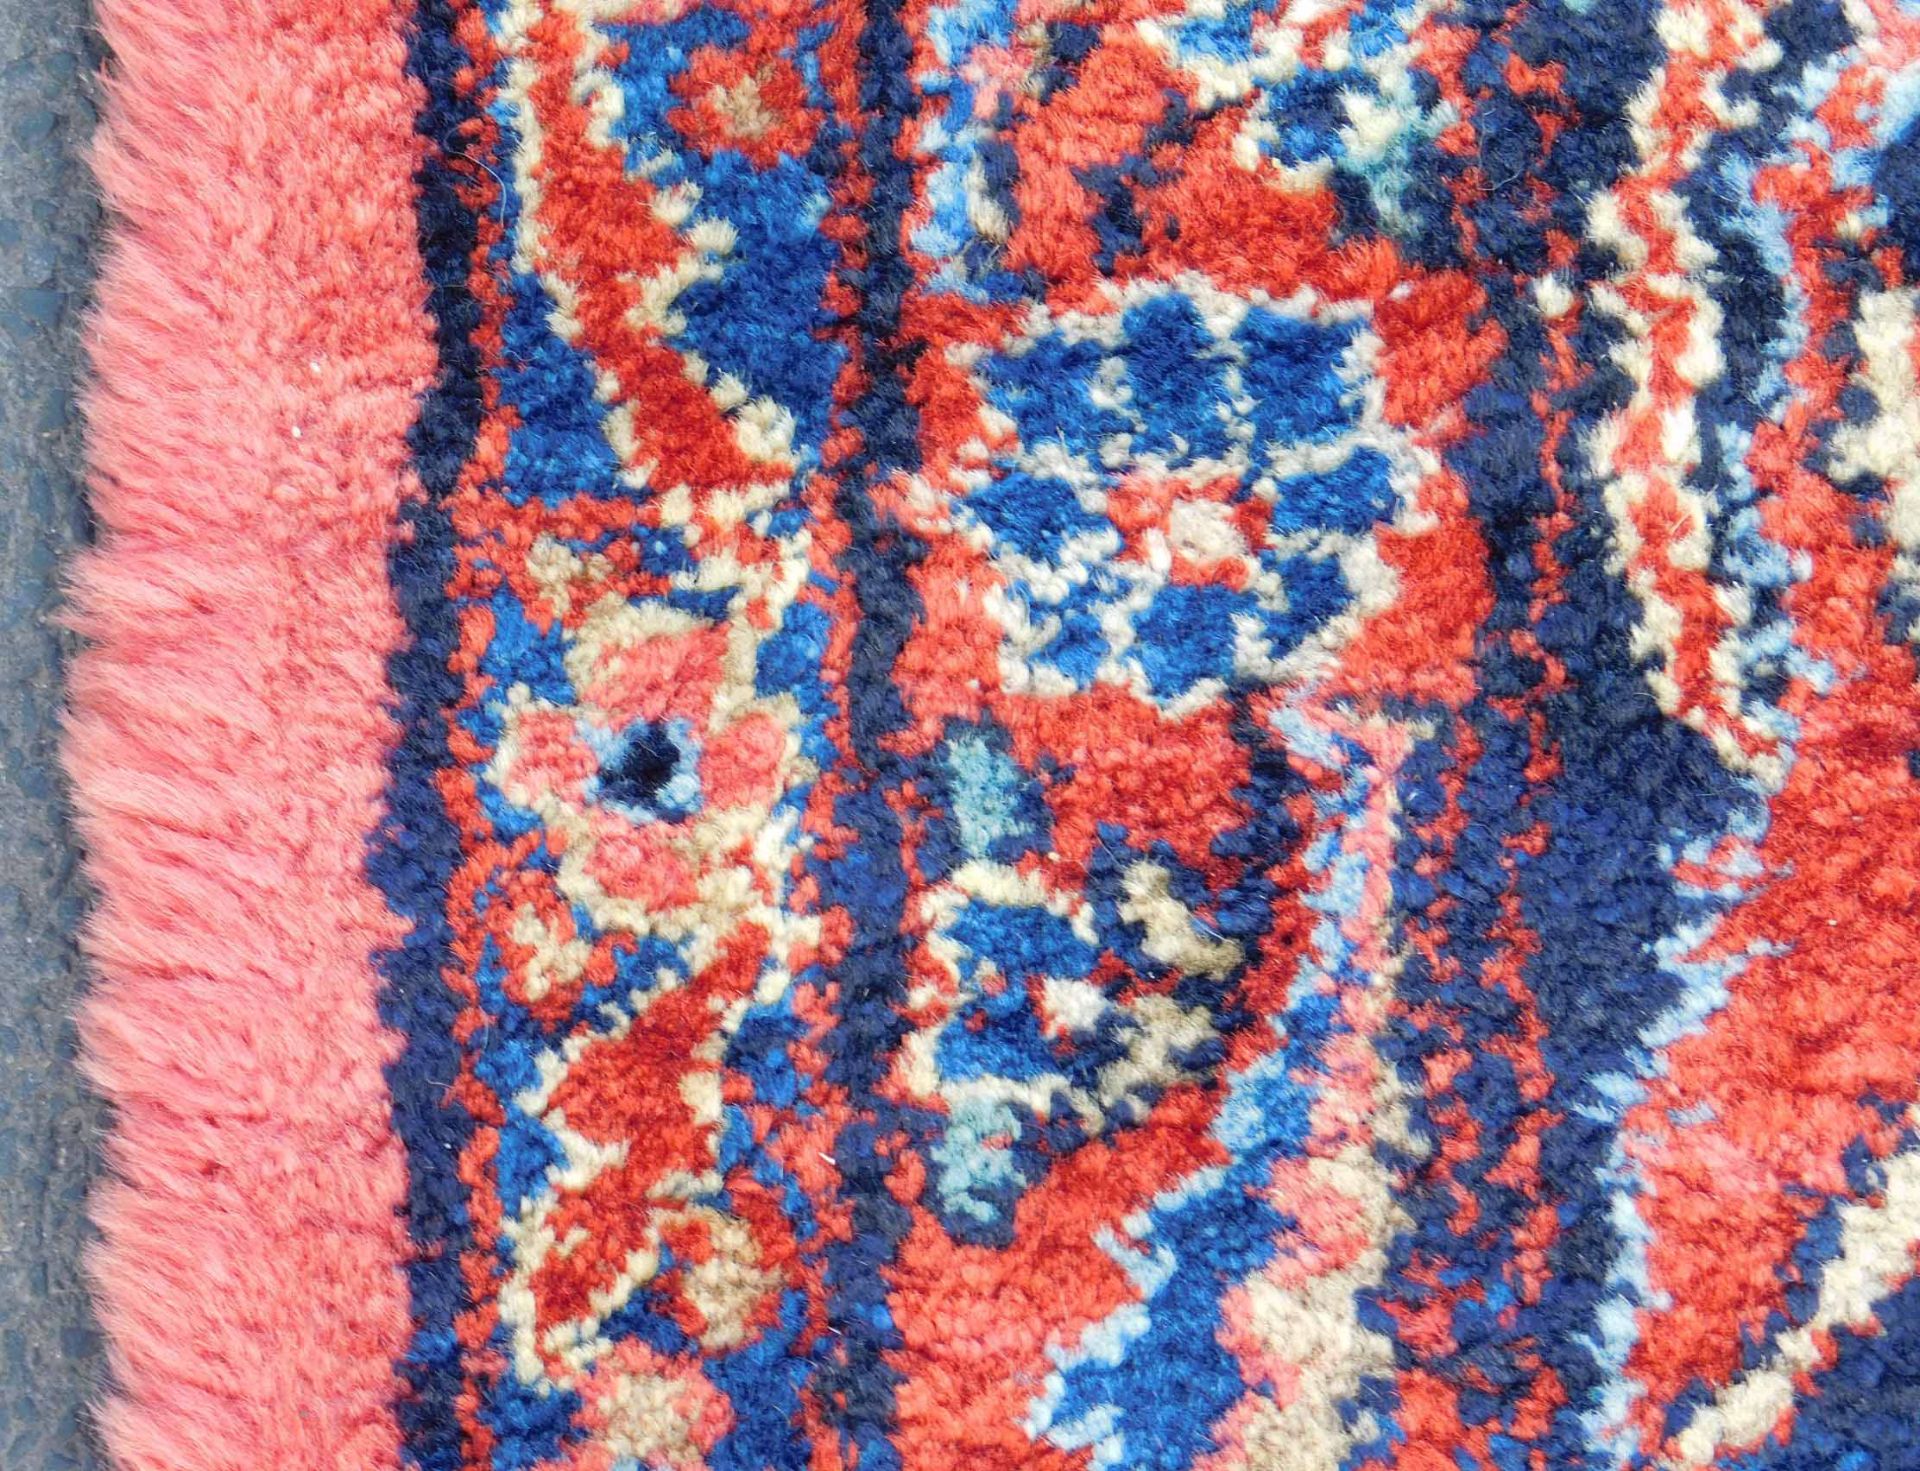 Saruk Persian carpet. "American Saruk". Iran. Around 100 years old. - Image 8 of 8